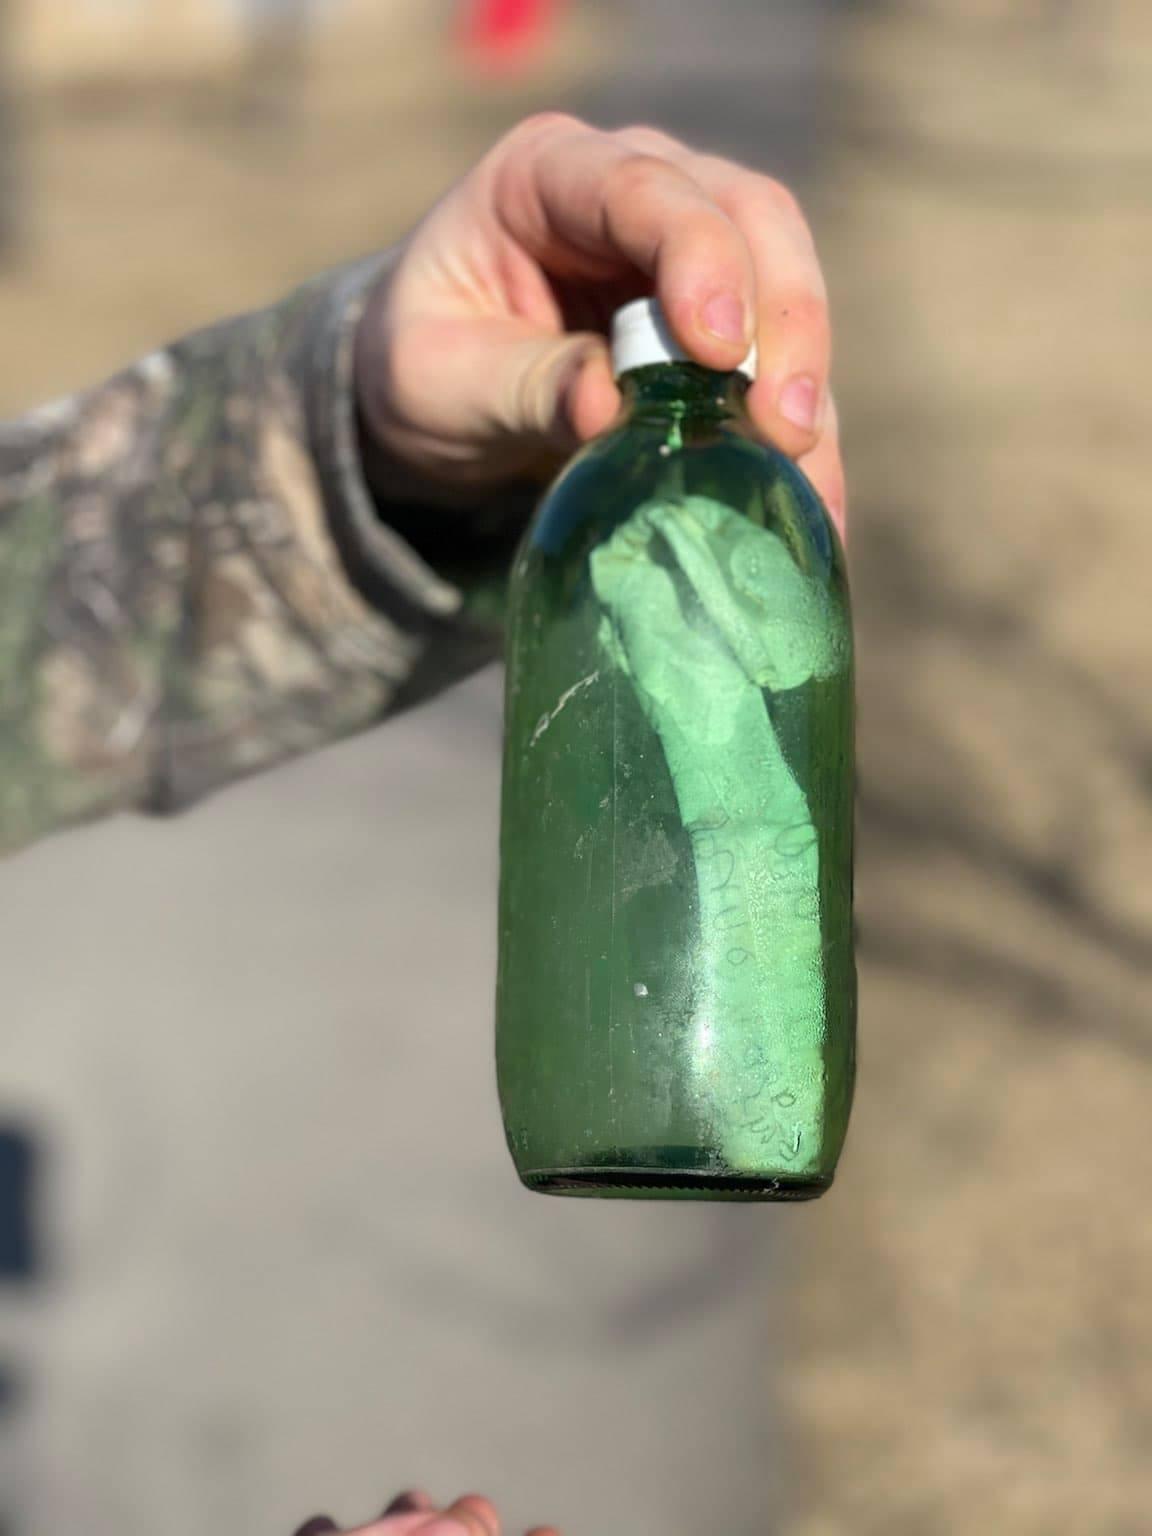 The letter written in 1993 was found sealed inside a bottle floating in a lake in Leduc, Alberta, Canada. (Courtesy of <a href="https://www.facebook.com/michelle.schwengler">Michelle Schwengler</a>)